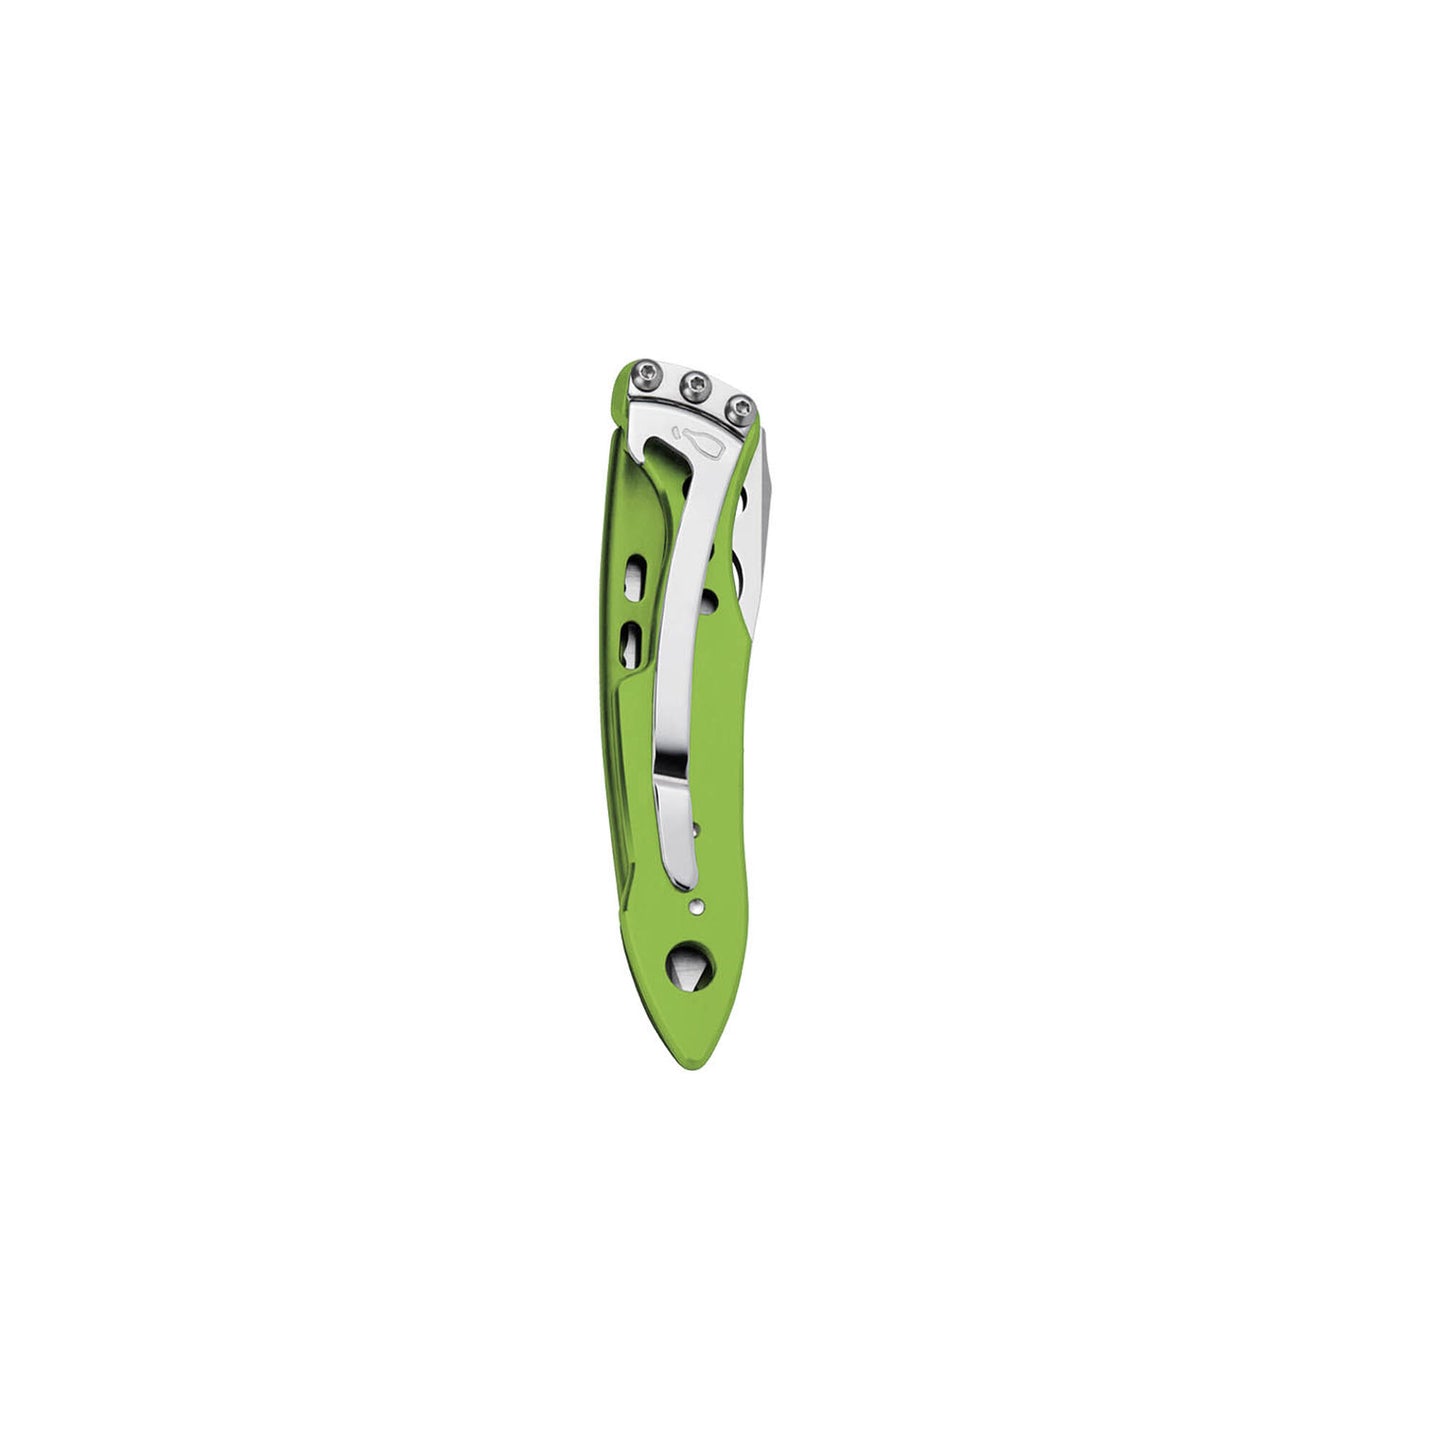 Leatherman Skeletool KBX 2.6" 420HC Sublime Green Folding Knife with Bottle Opener